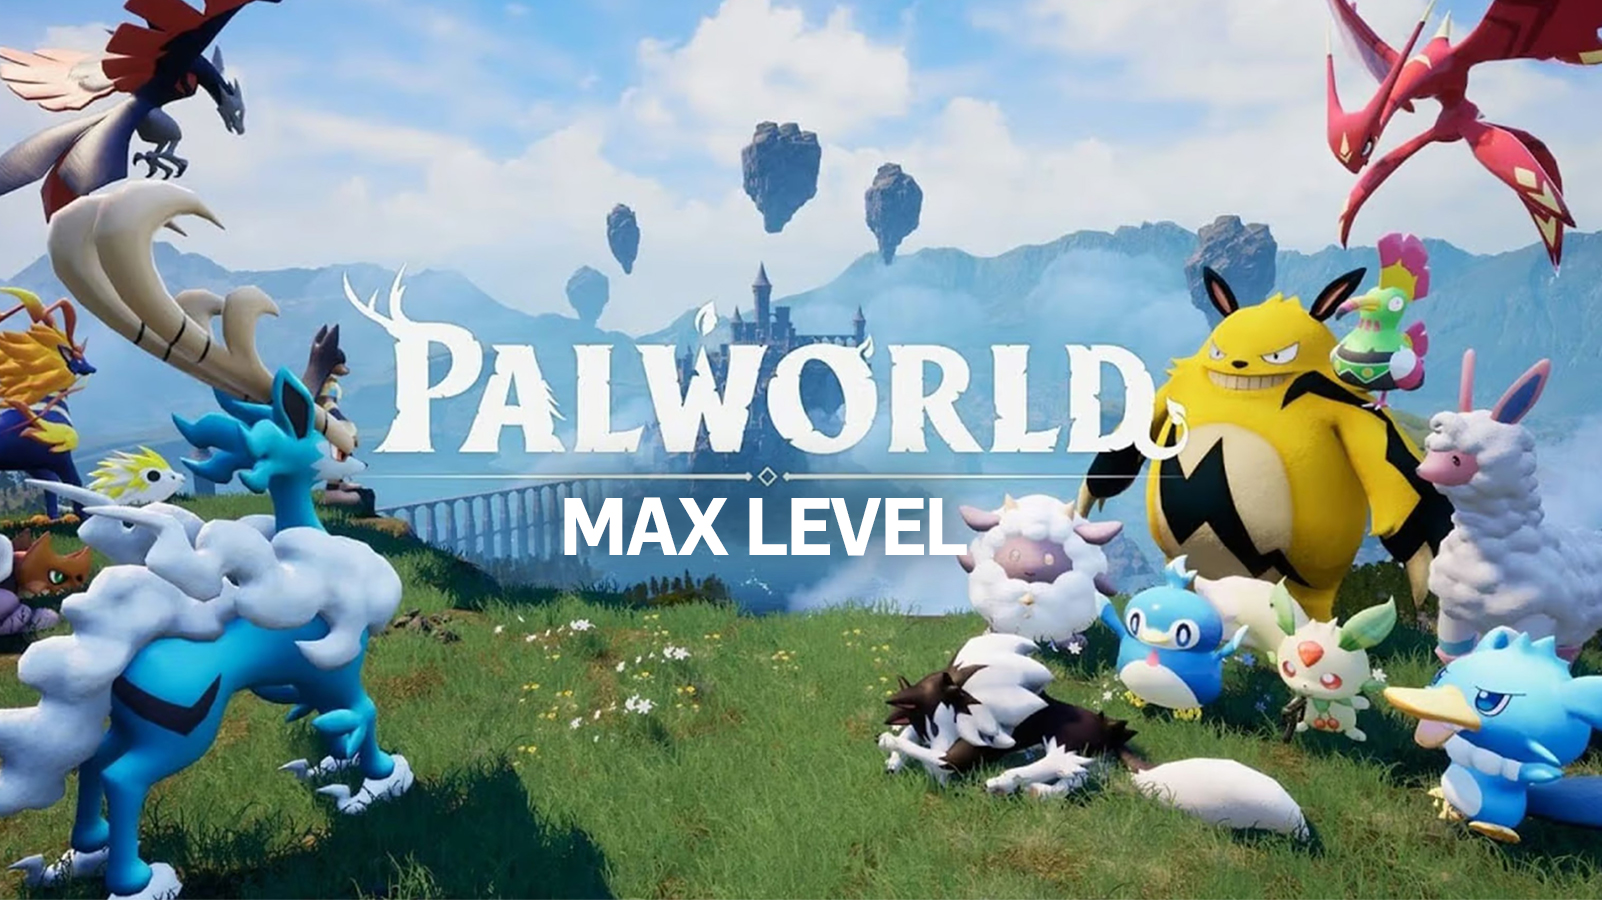 Palworld Max Level graphic